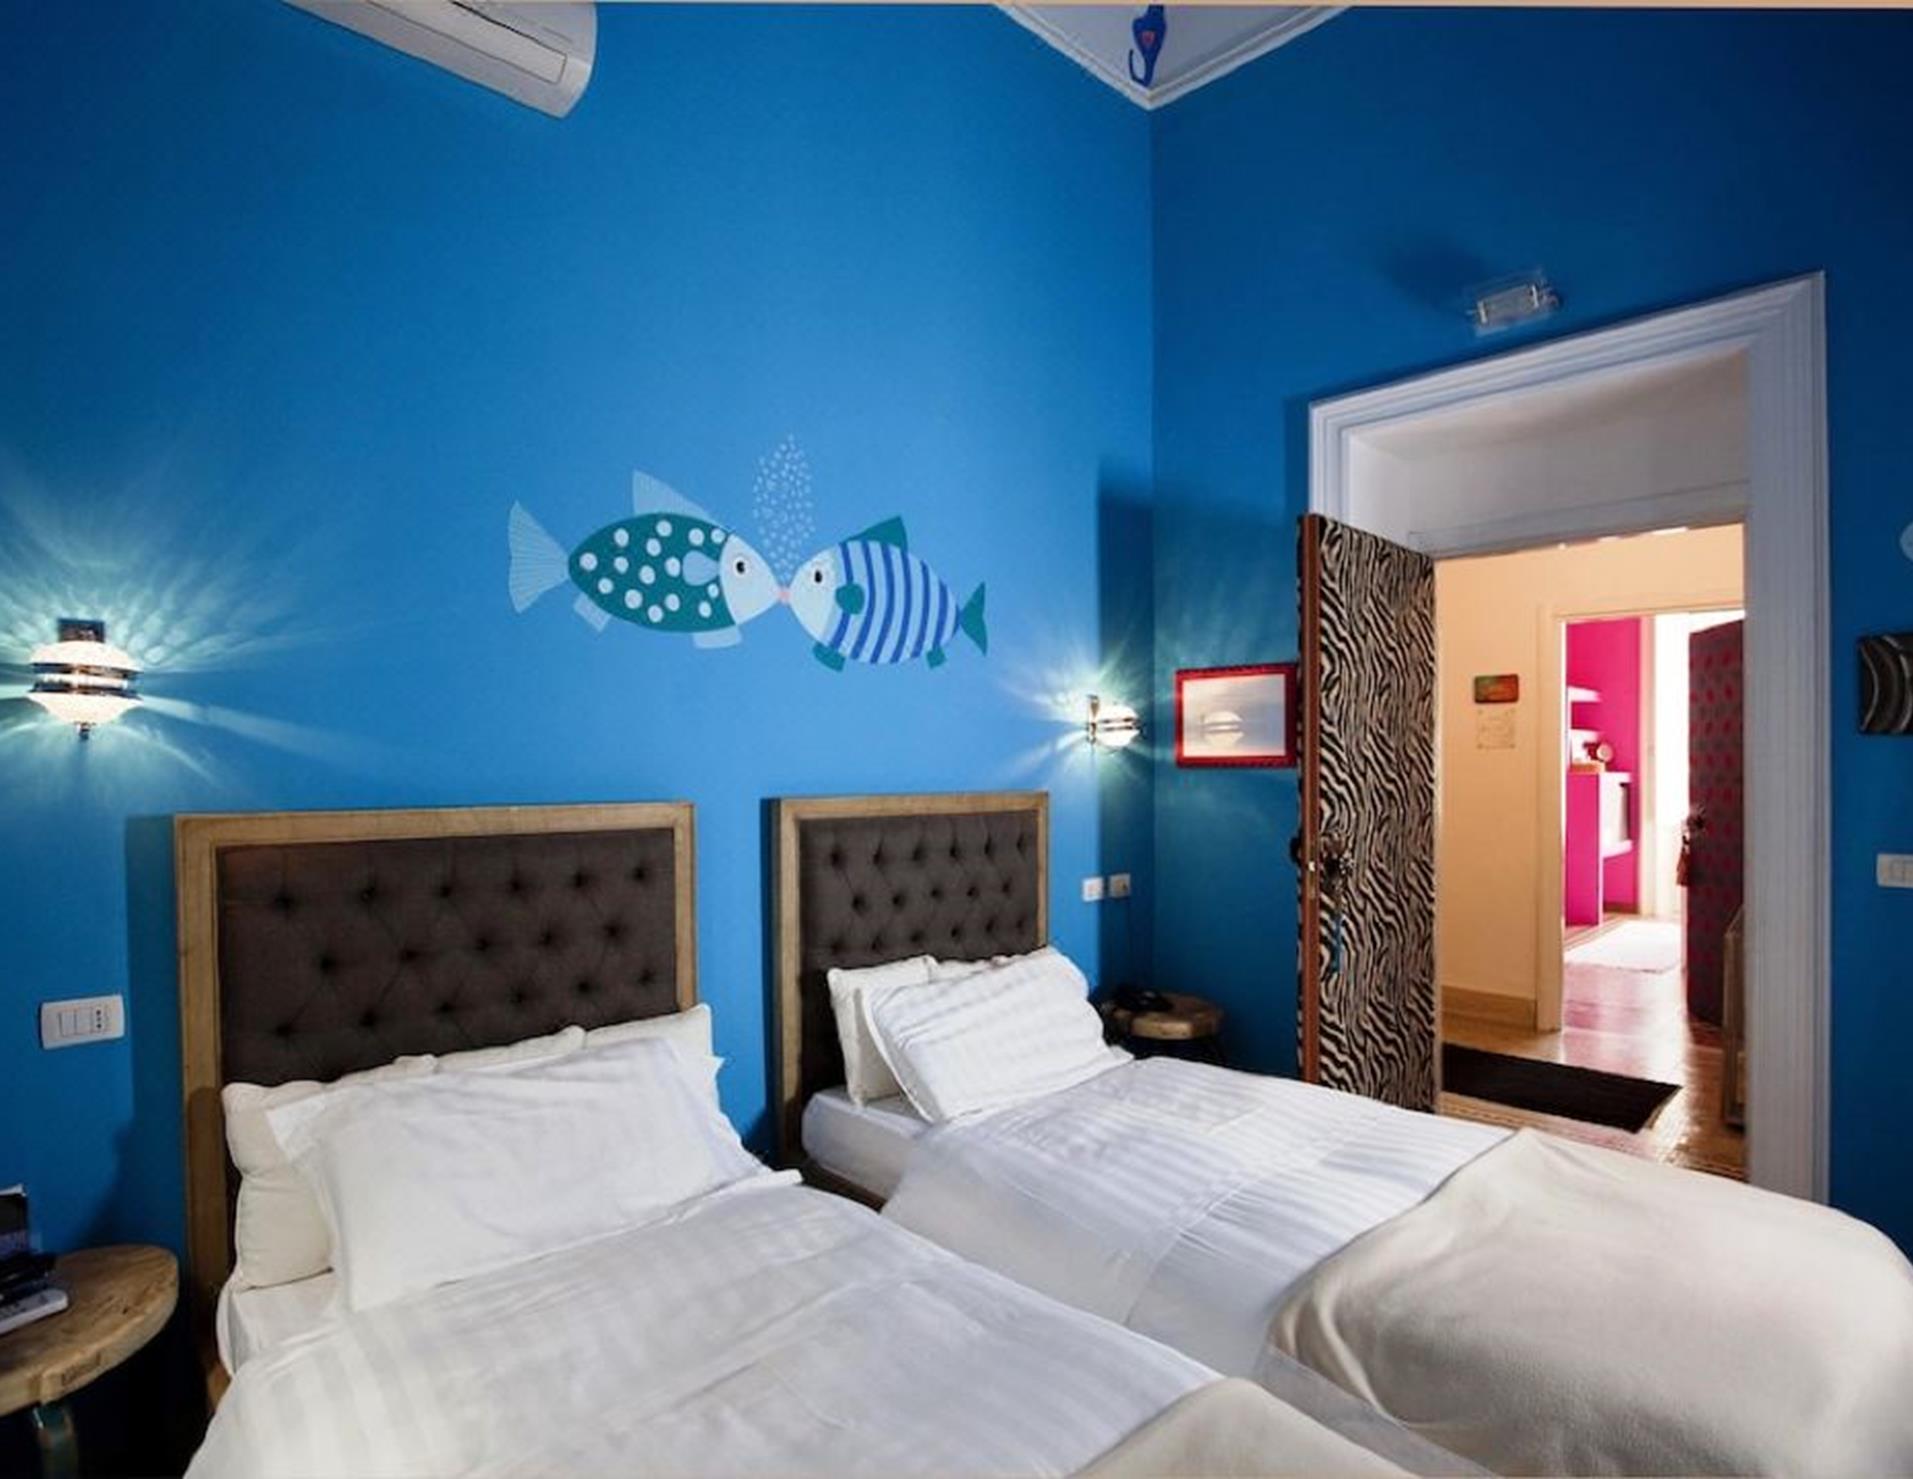 Hotel Miramare - Room 9